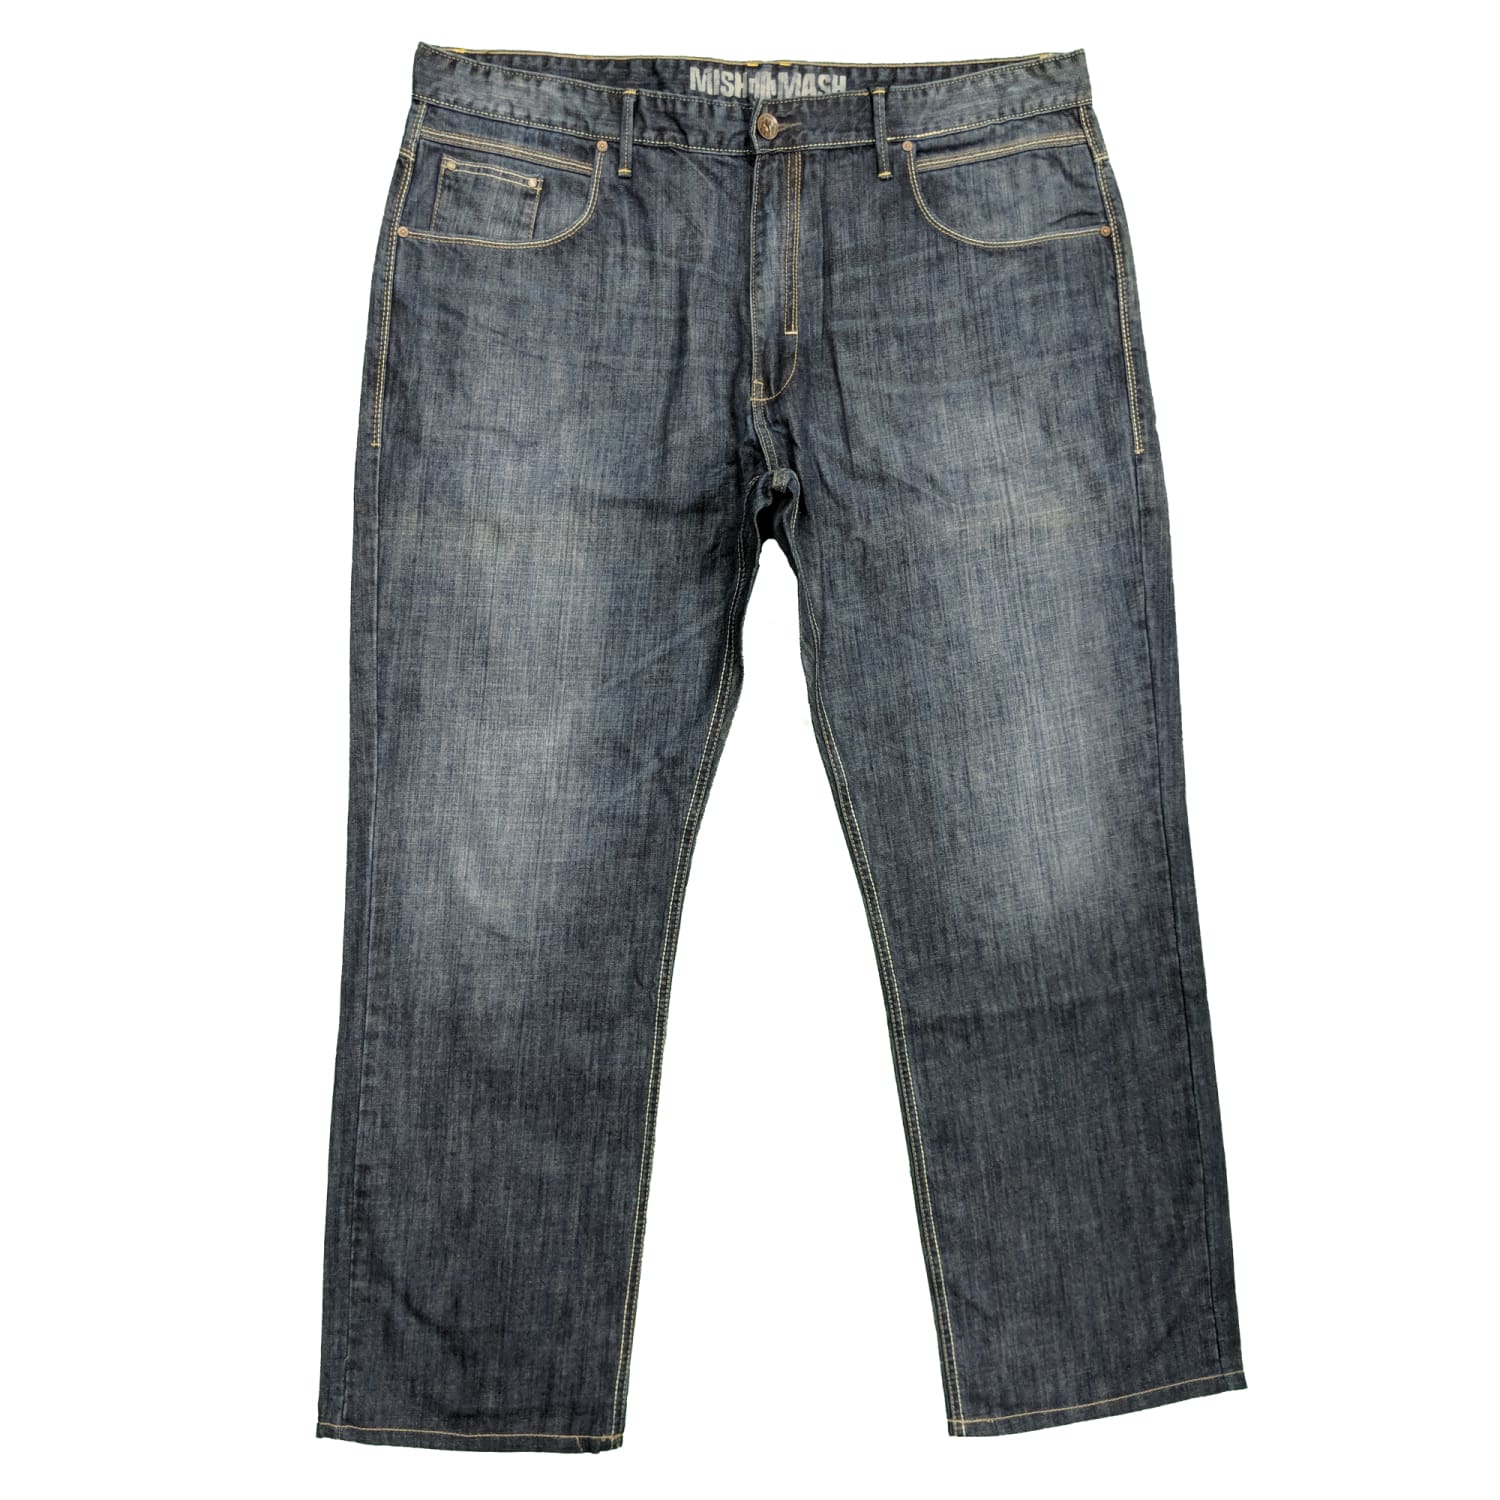 Mish Mash Jeans - 14350 - 1988 Manhattan 1